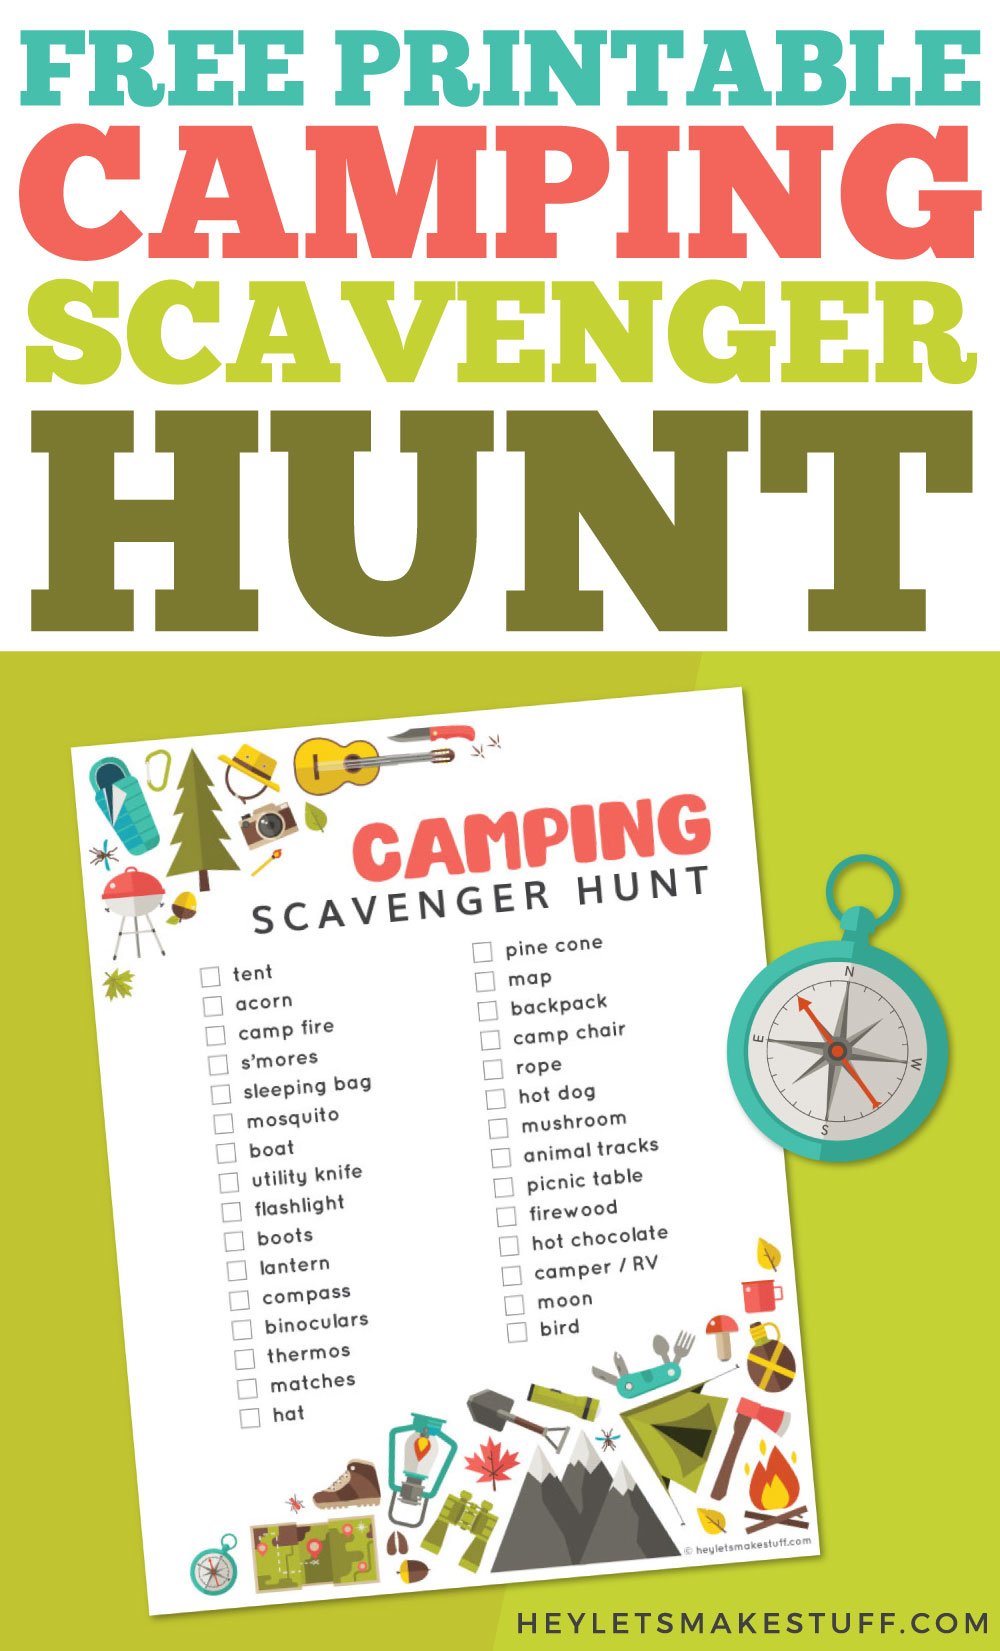 free-printable-camping-scavenger-hunt-hey-let-s-make-stuff